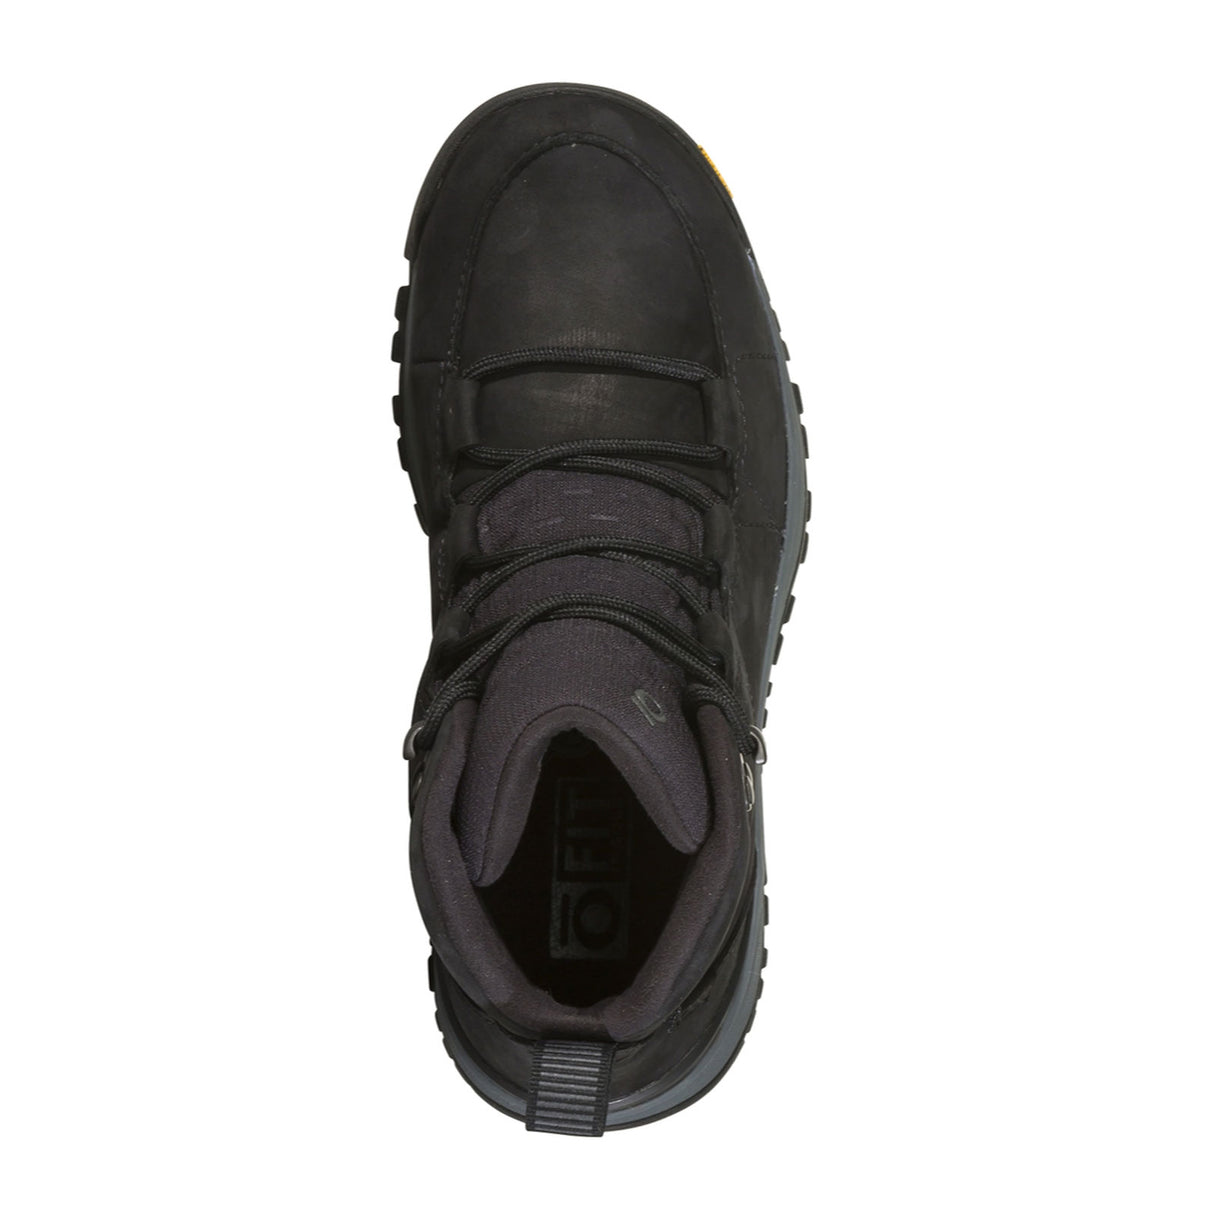 Oboz Sphinx Mid Insulated B-DRY Winter Boot (Women) - Castlerock Boots - Winter - Low - The Heel Shoe Fitters